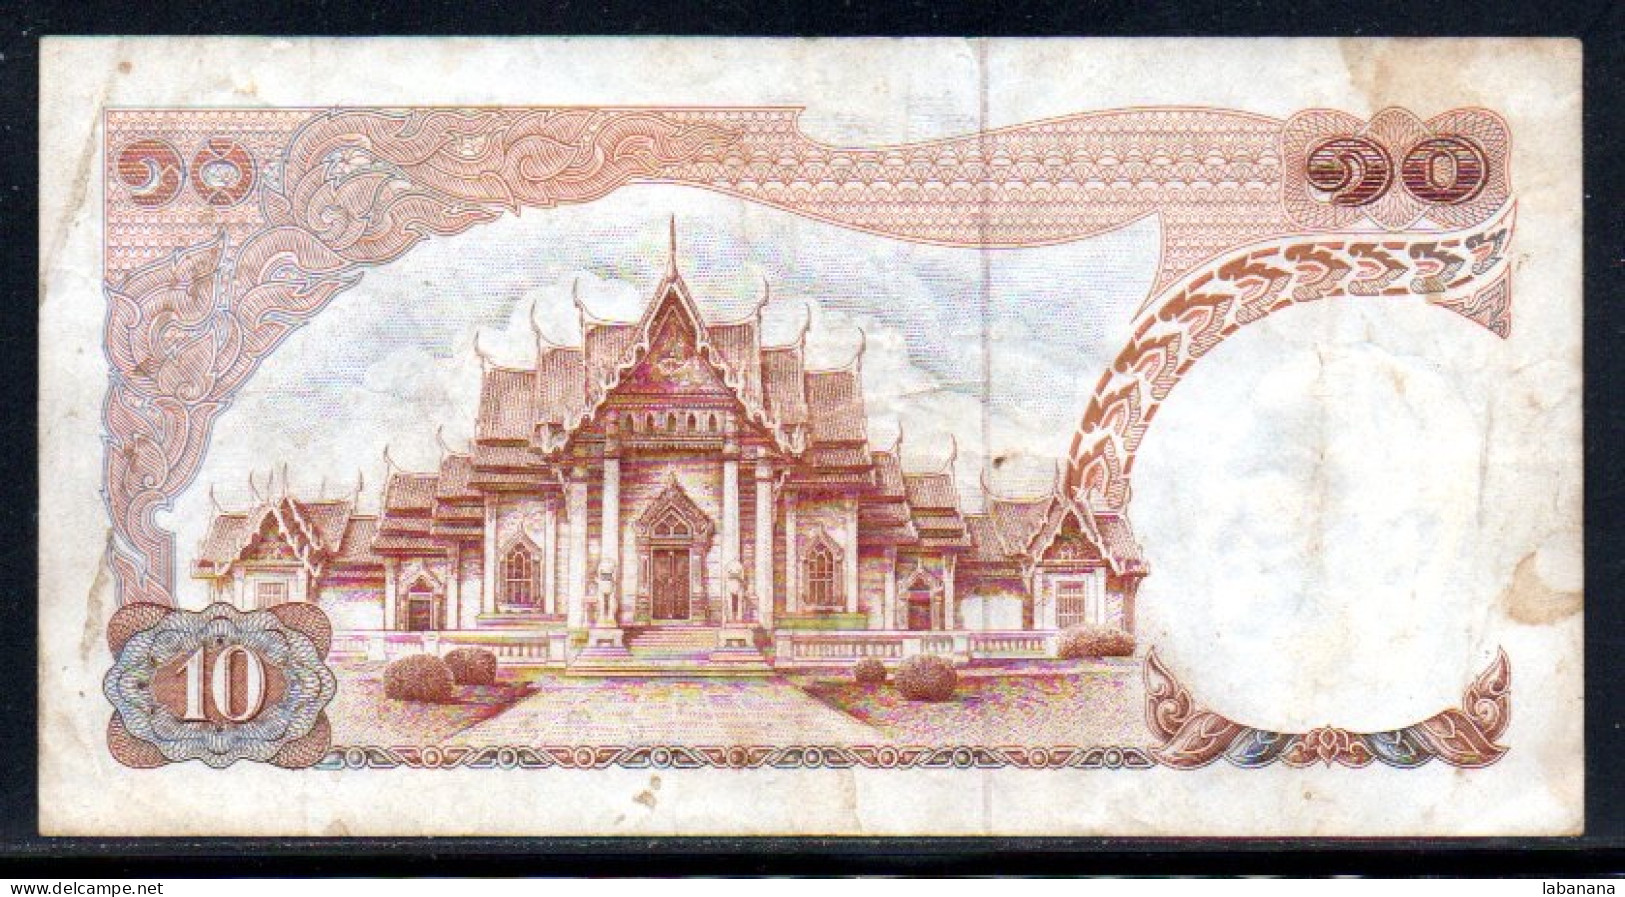 659-Thailande 10 Baht 1969/70 5F677 - Thailand